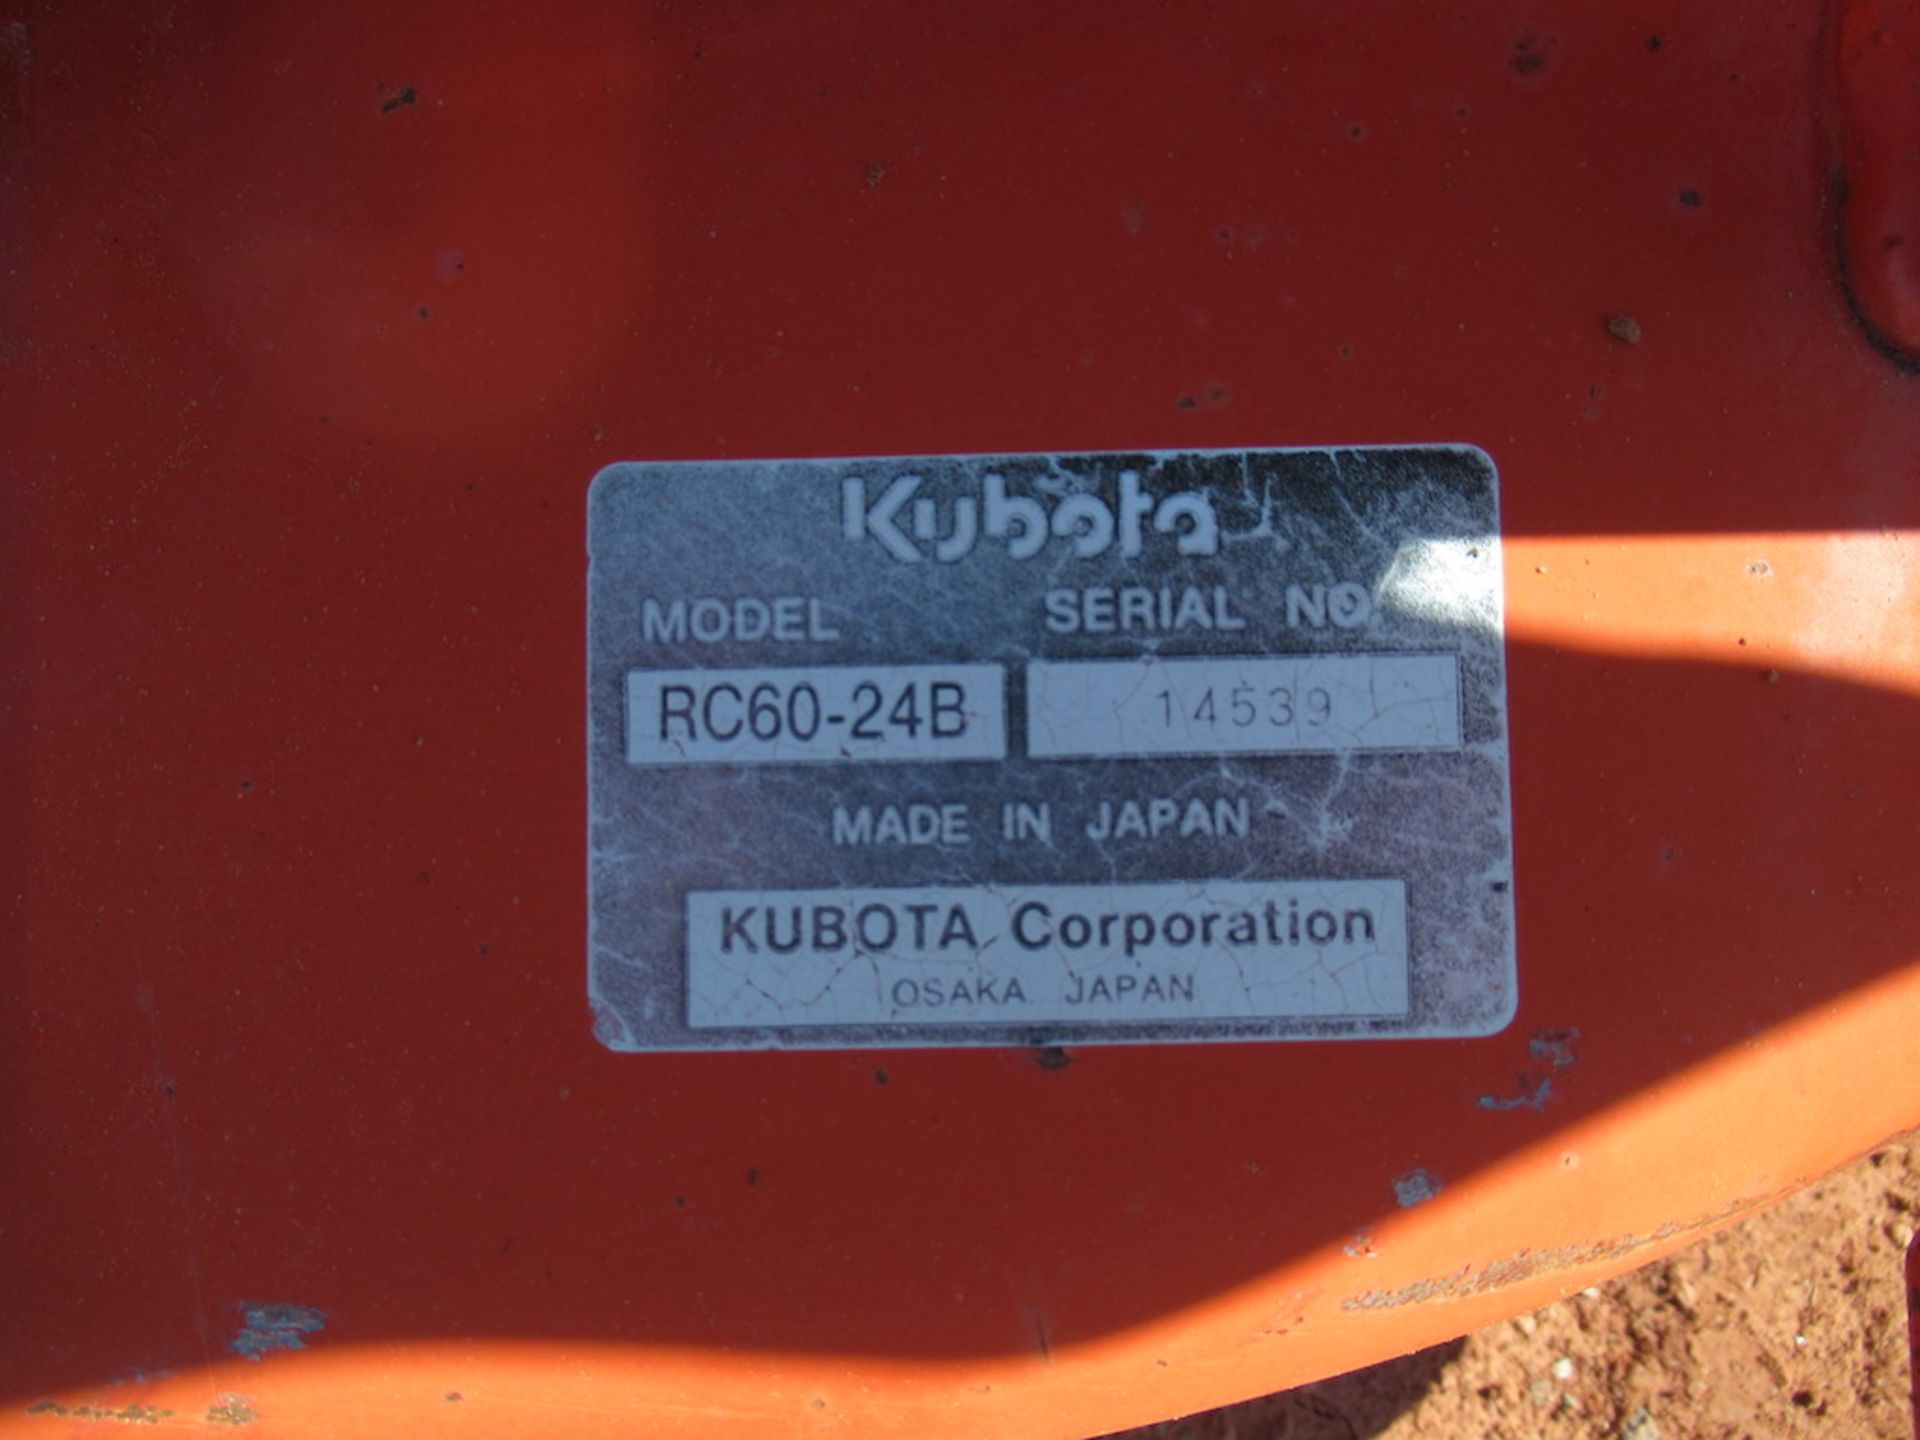 Lawn Mower Attachment, Kubota Model RC60-24B, 1, 364 lbs, 62"x48"x27" (pallet), ISLE 2 POD 21 - Image 6 of 9